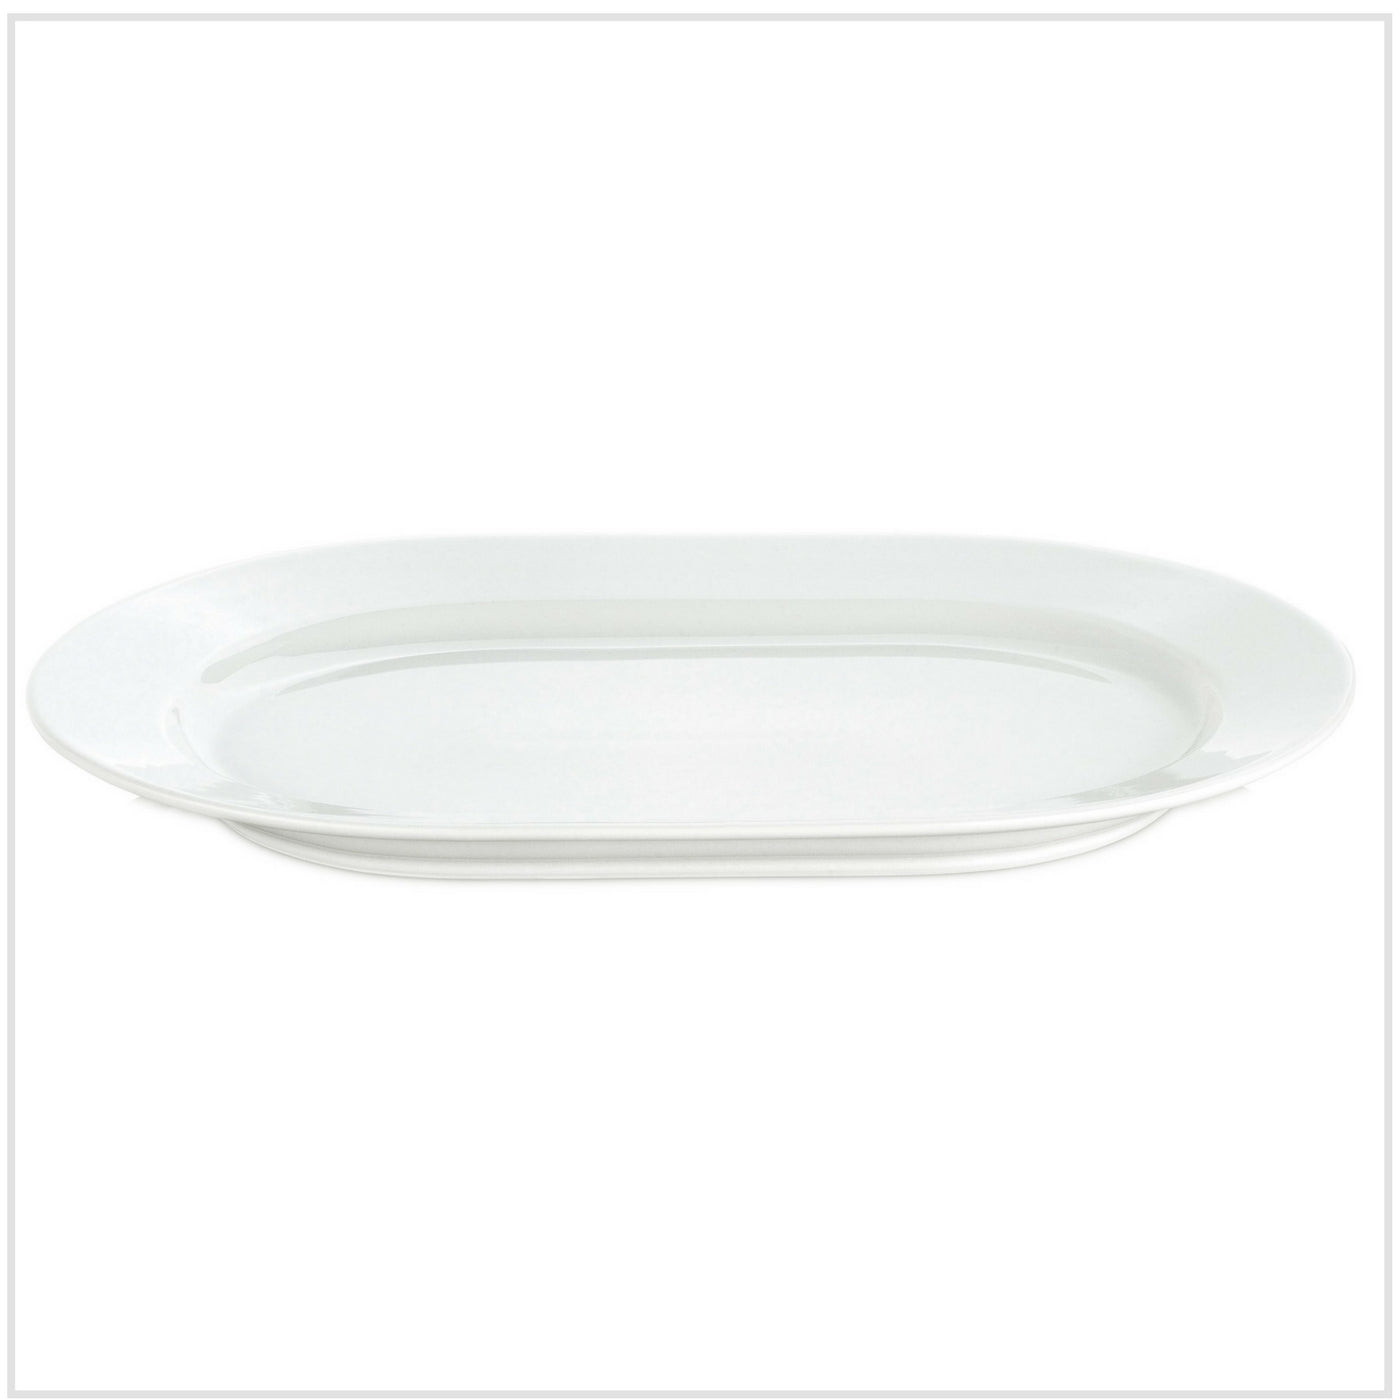 Pillivuyt Porcelain Sancerre Oval Platter Dish 26x25cm